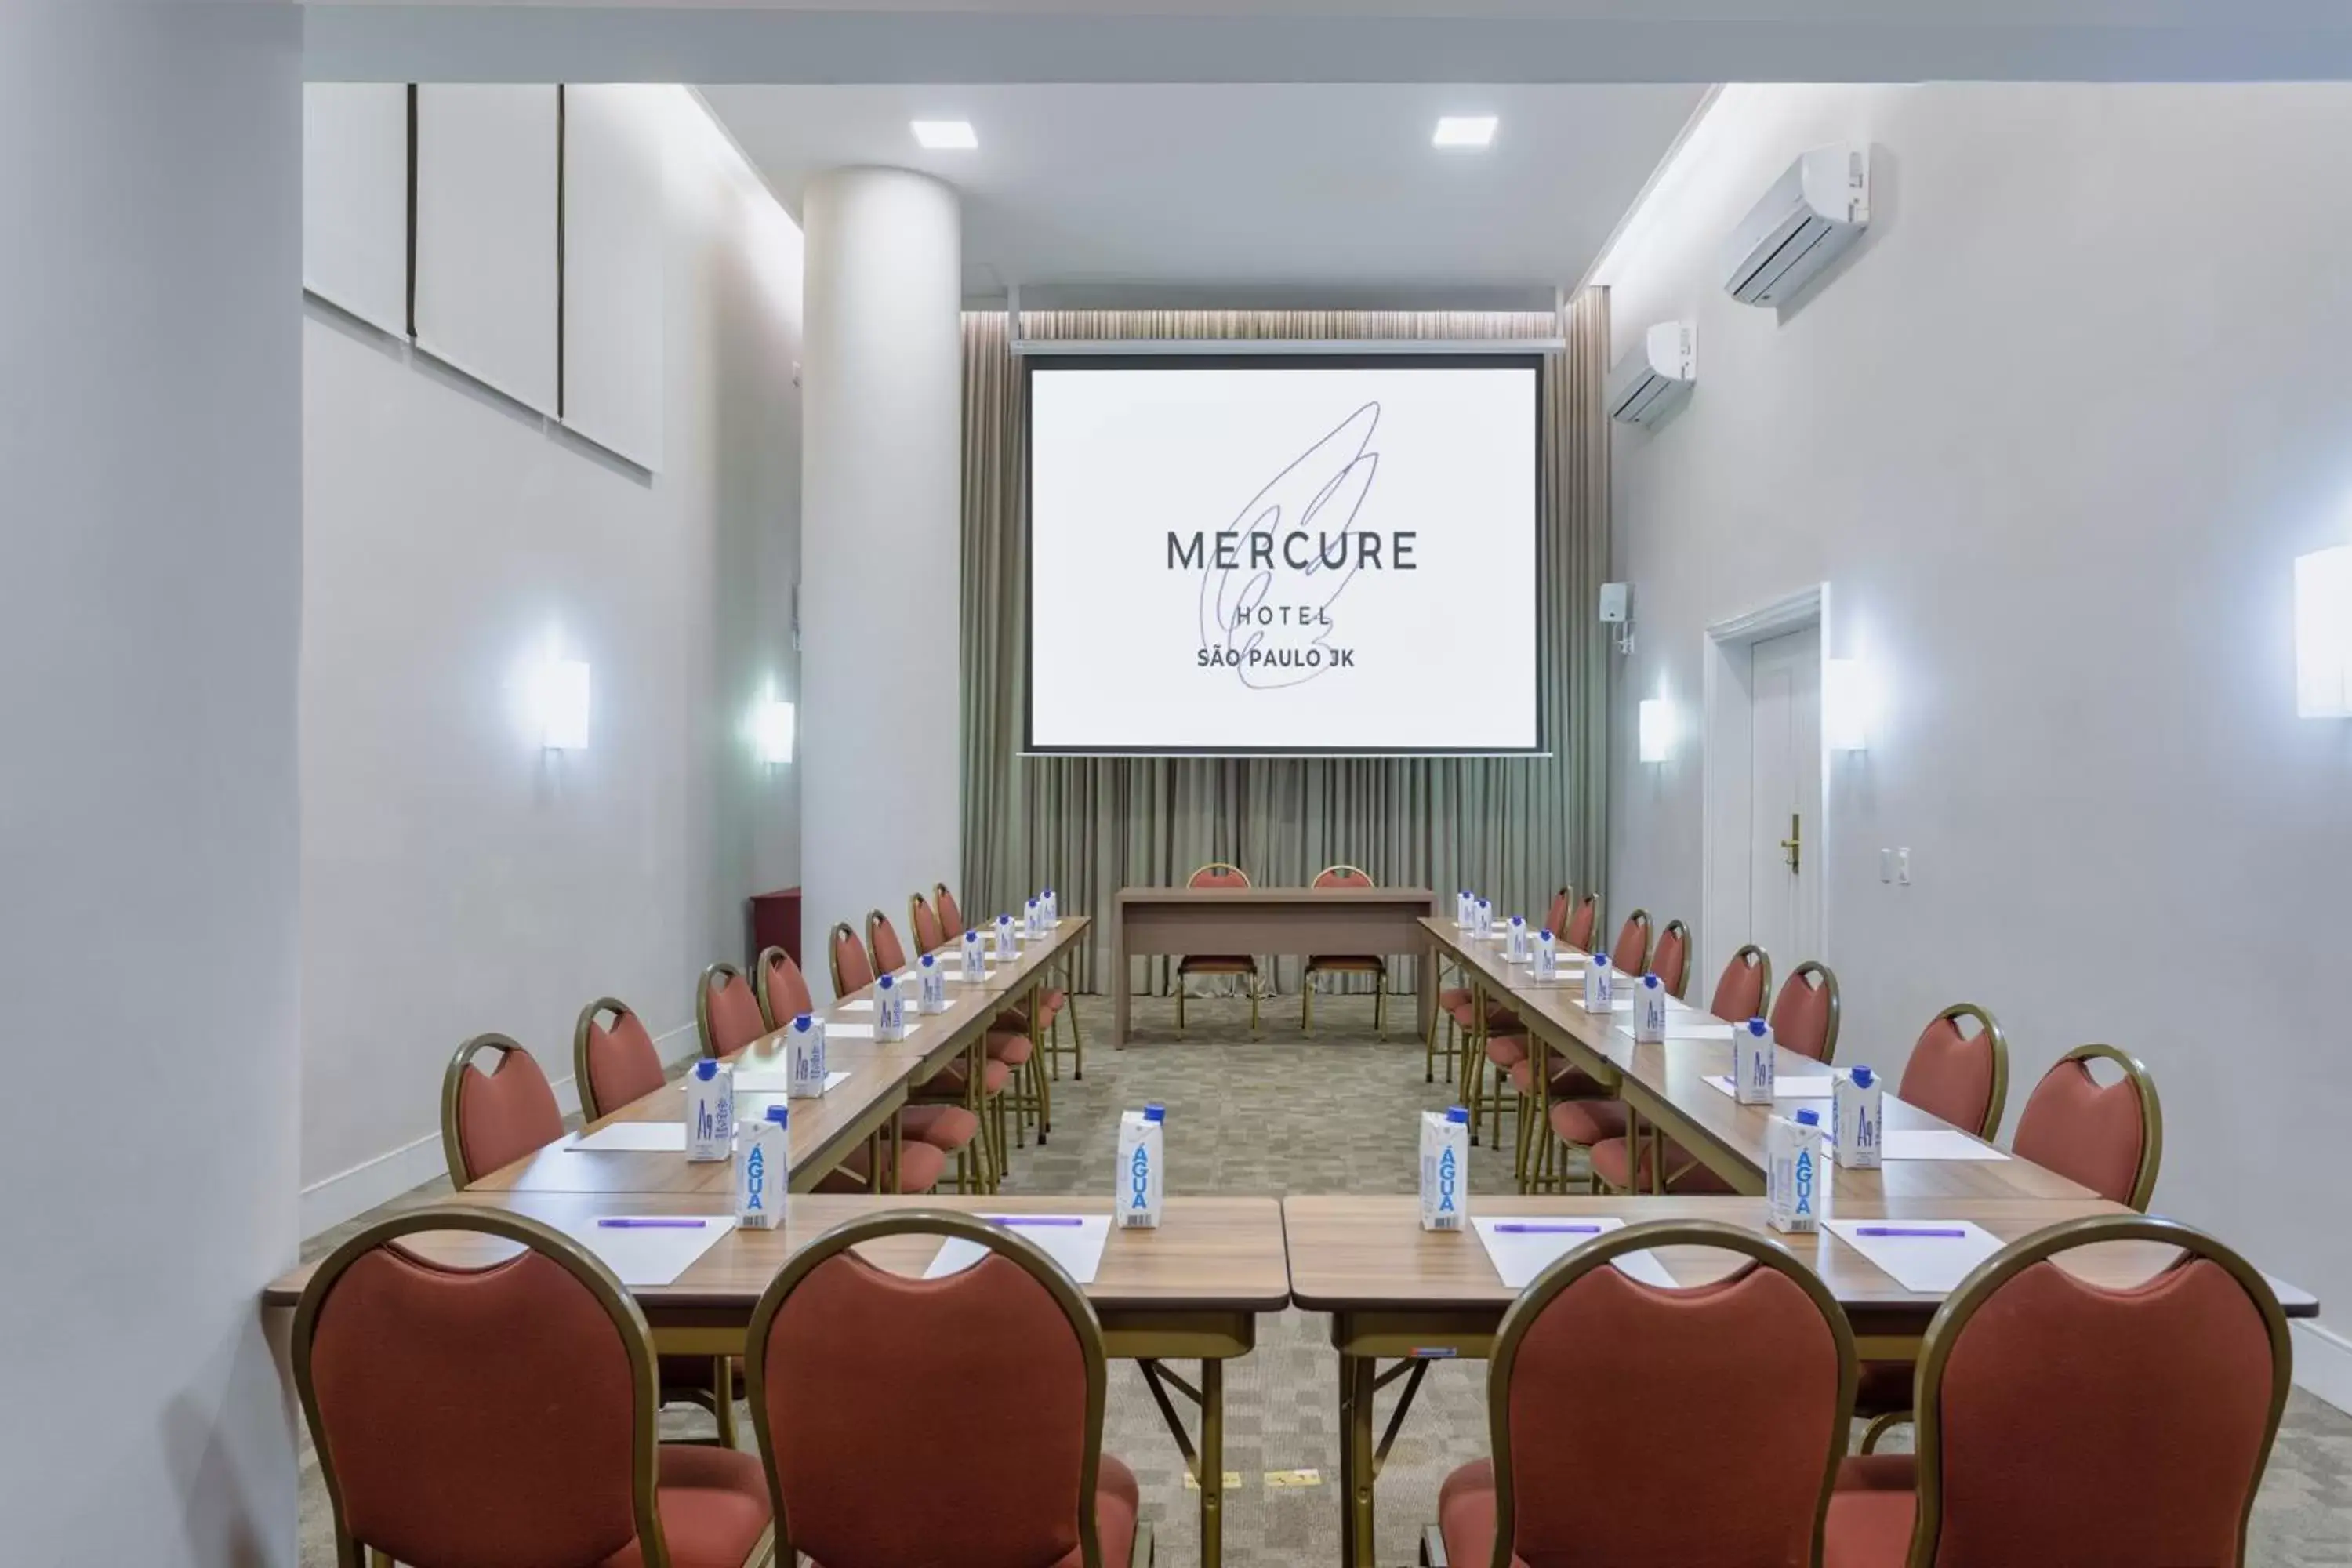 Meeting/conference room in Mercure Sao Paulo JK